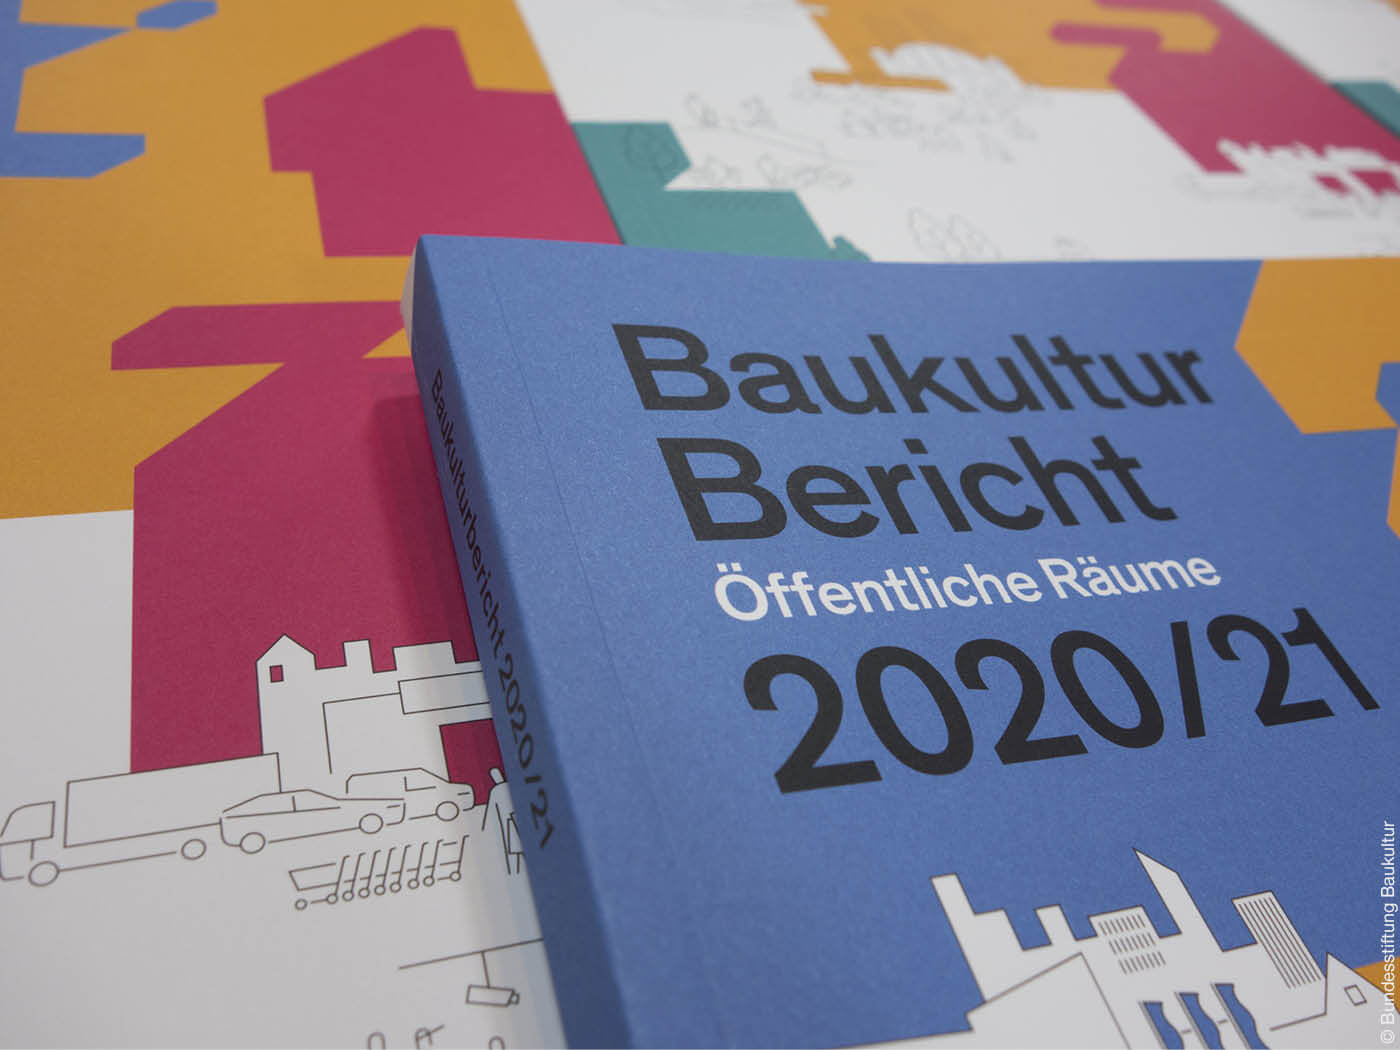 Baukulturbericht Cover